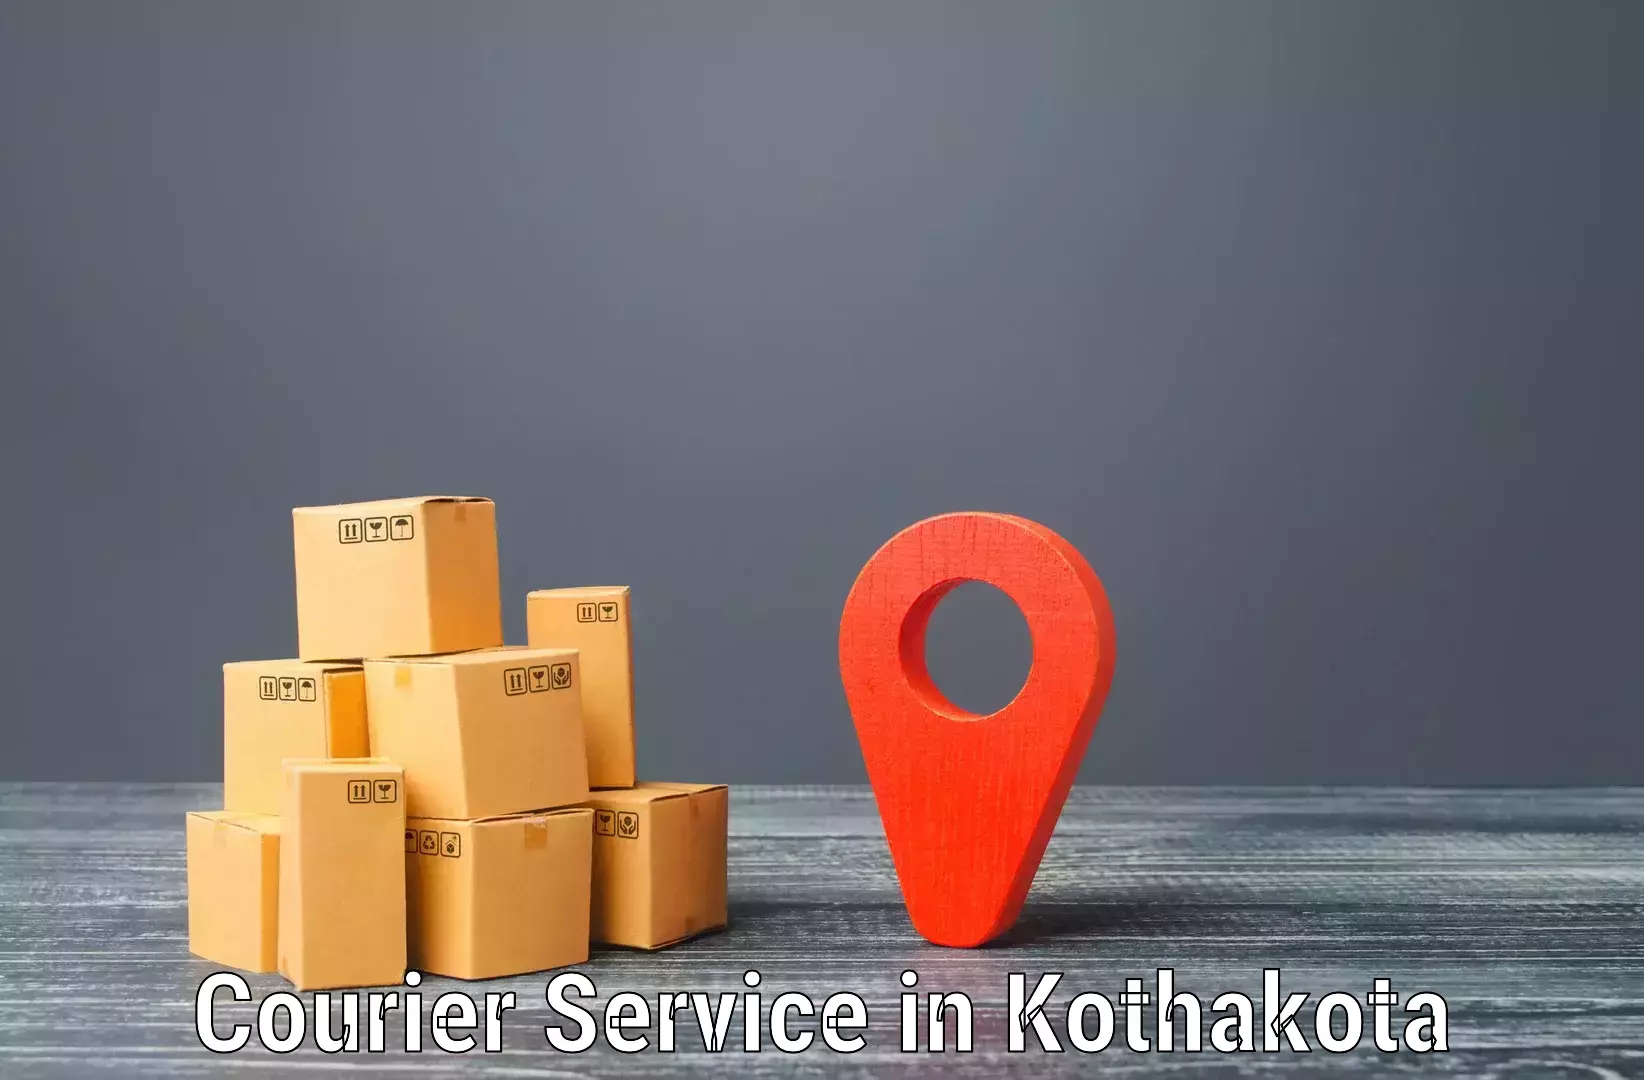 Heavyweight shipping in Kothakota